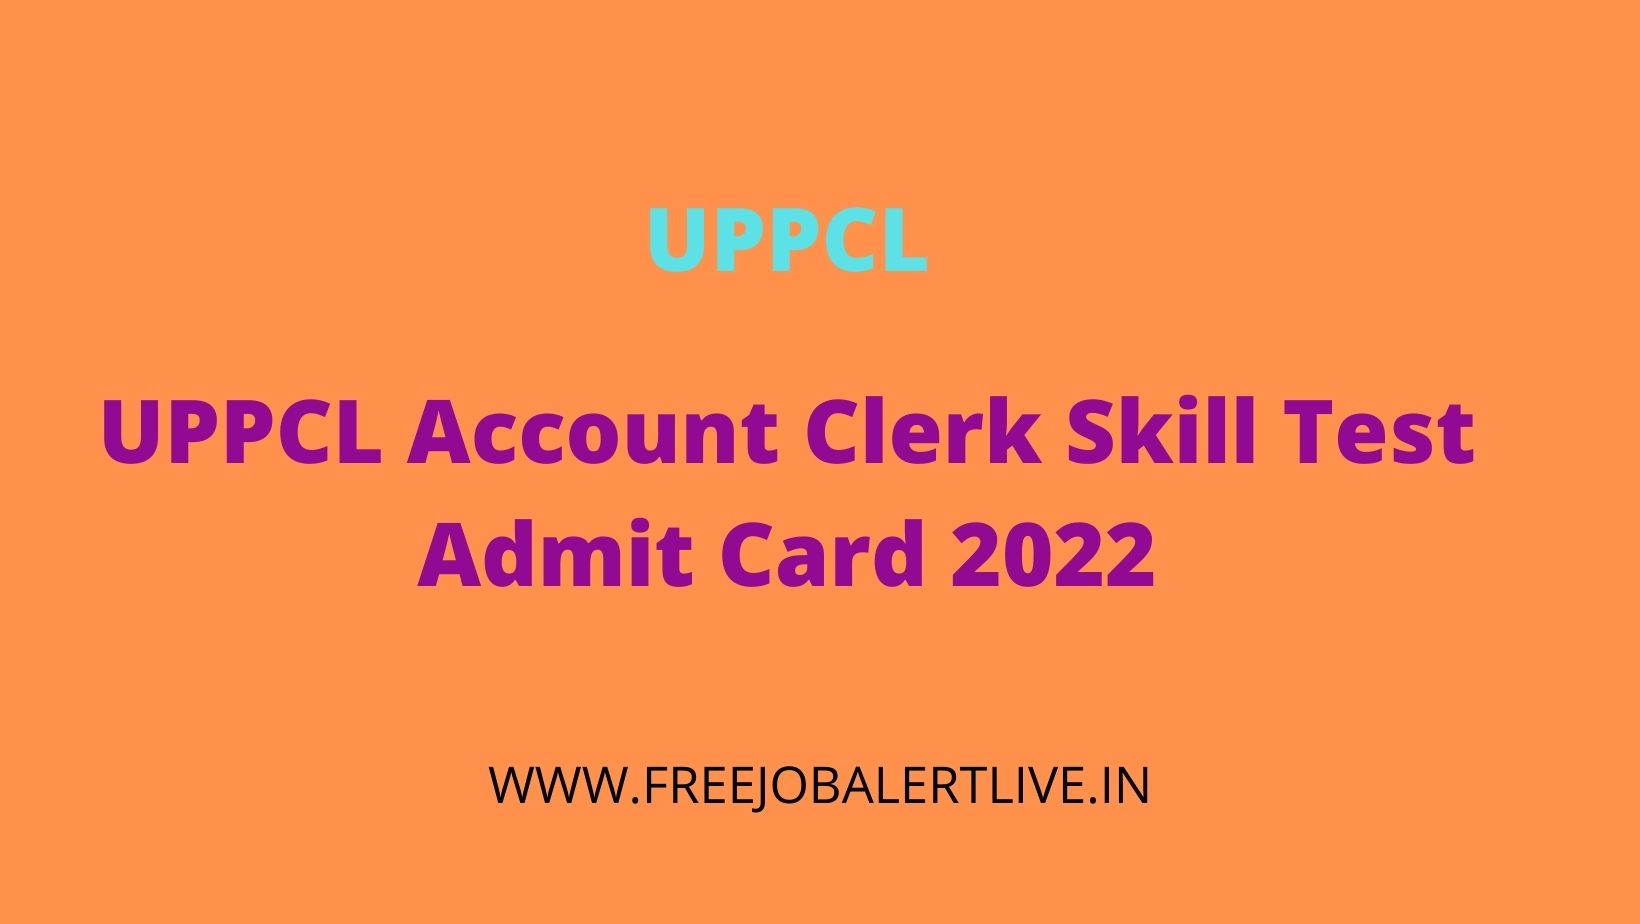 UPPCL Account Clerk Skill Test Admit Card 2022